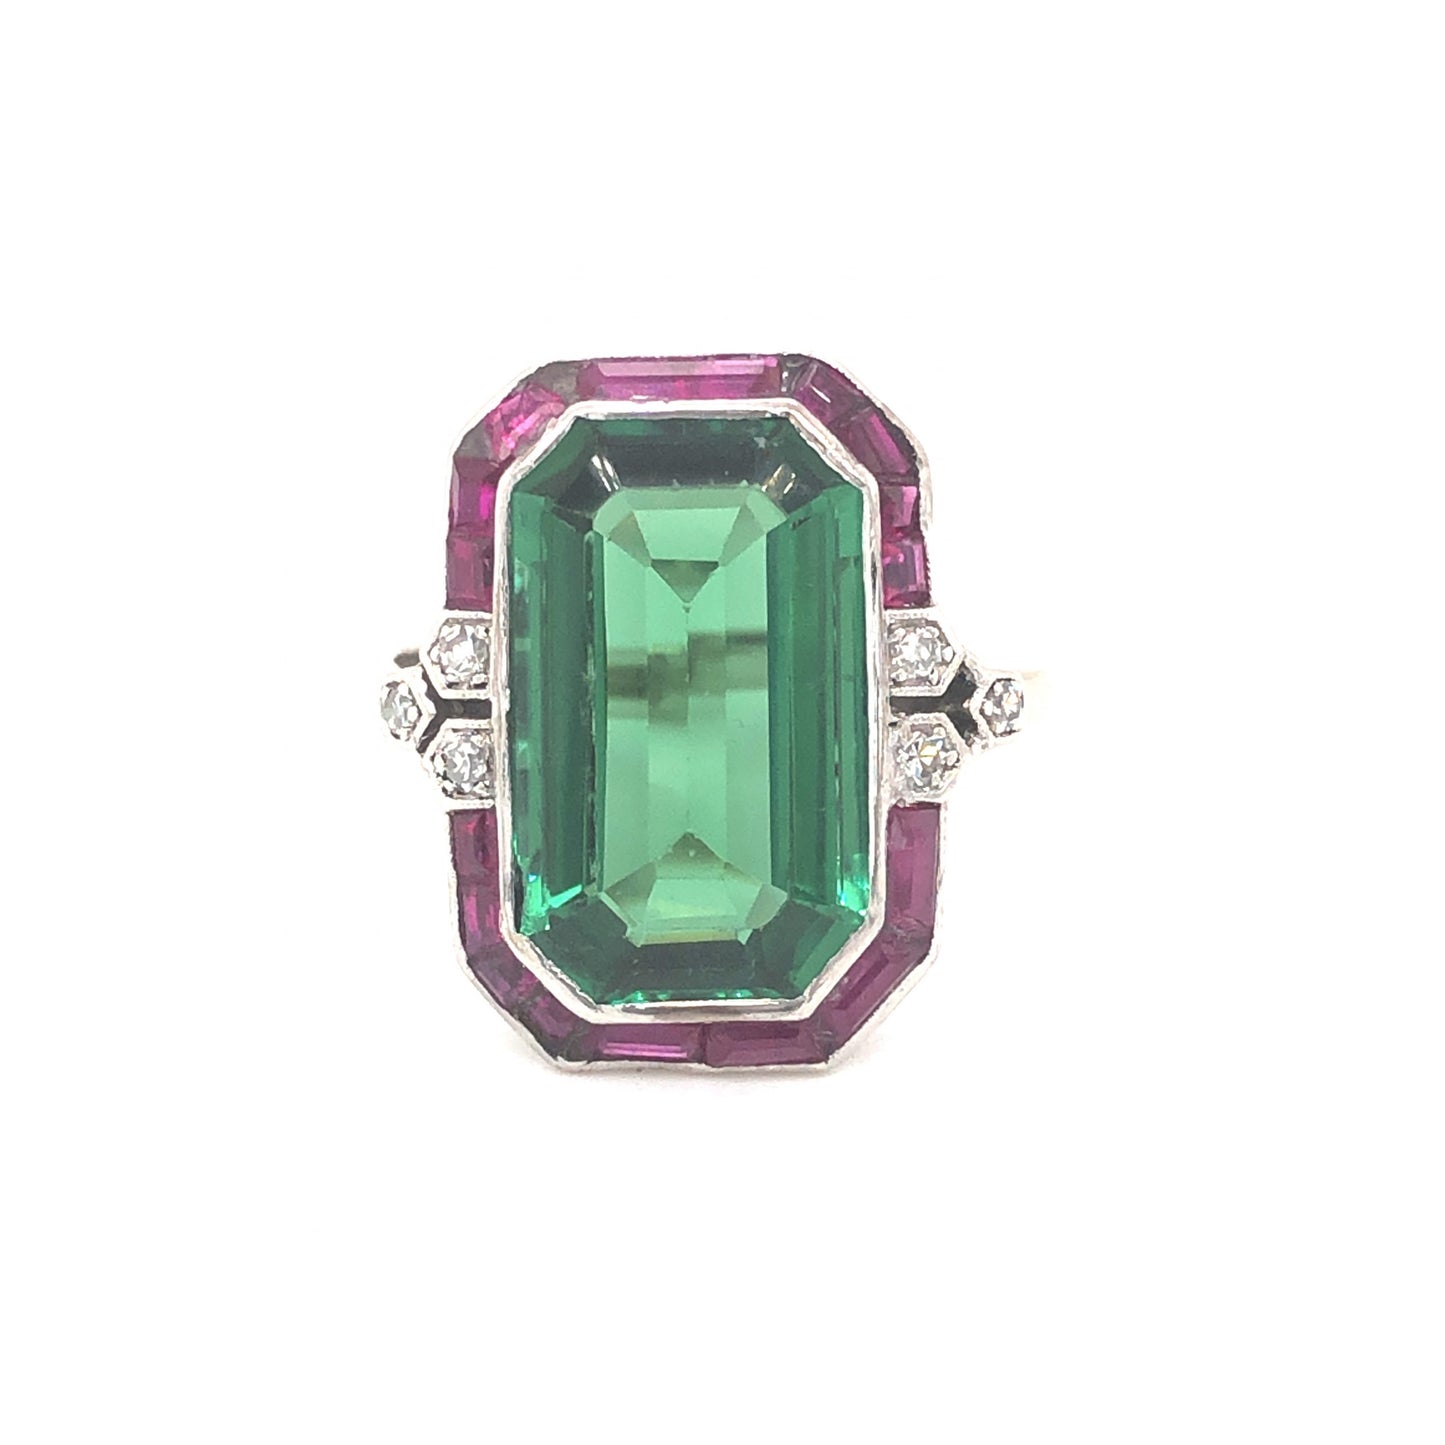 4.81 Art Deco Tourmaline & Ruby Ring with Diamonds in 14k